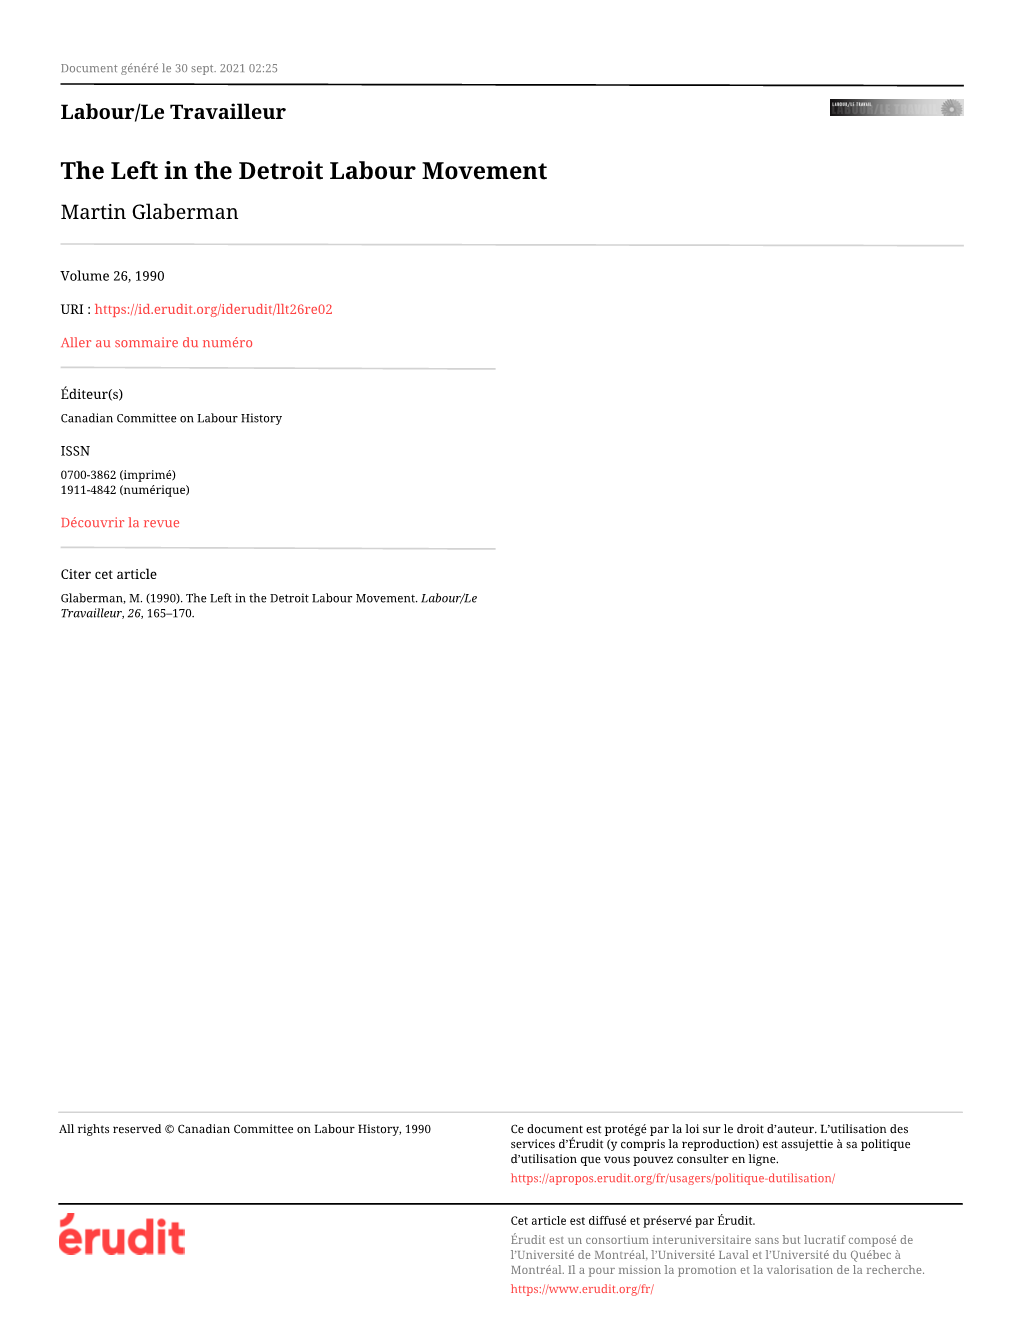 The Left in the Detroit Labour Movement Martin Glaberman